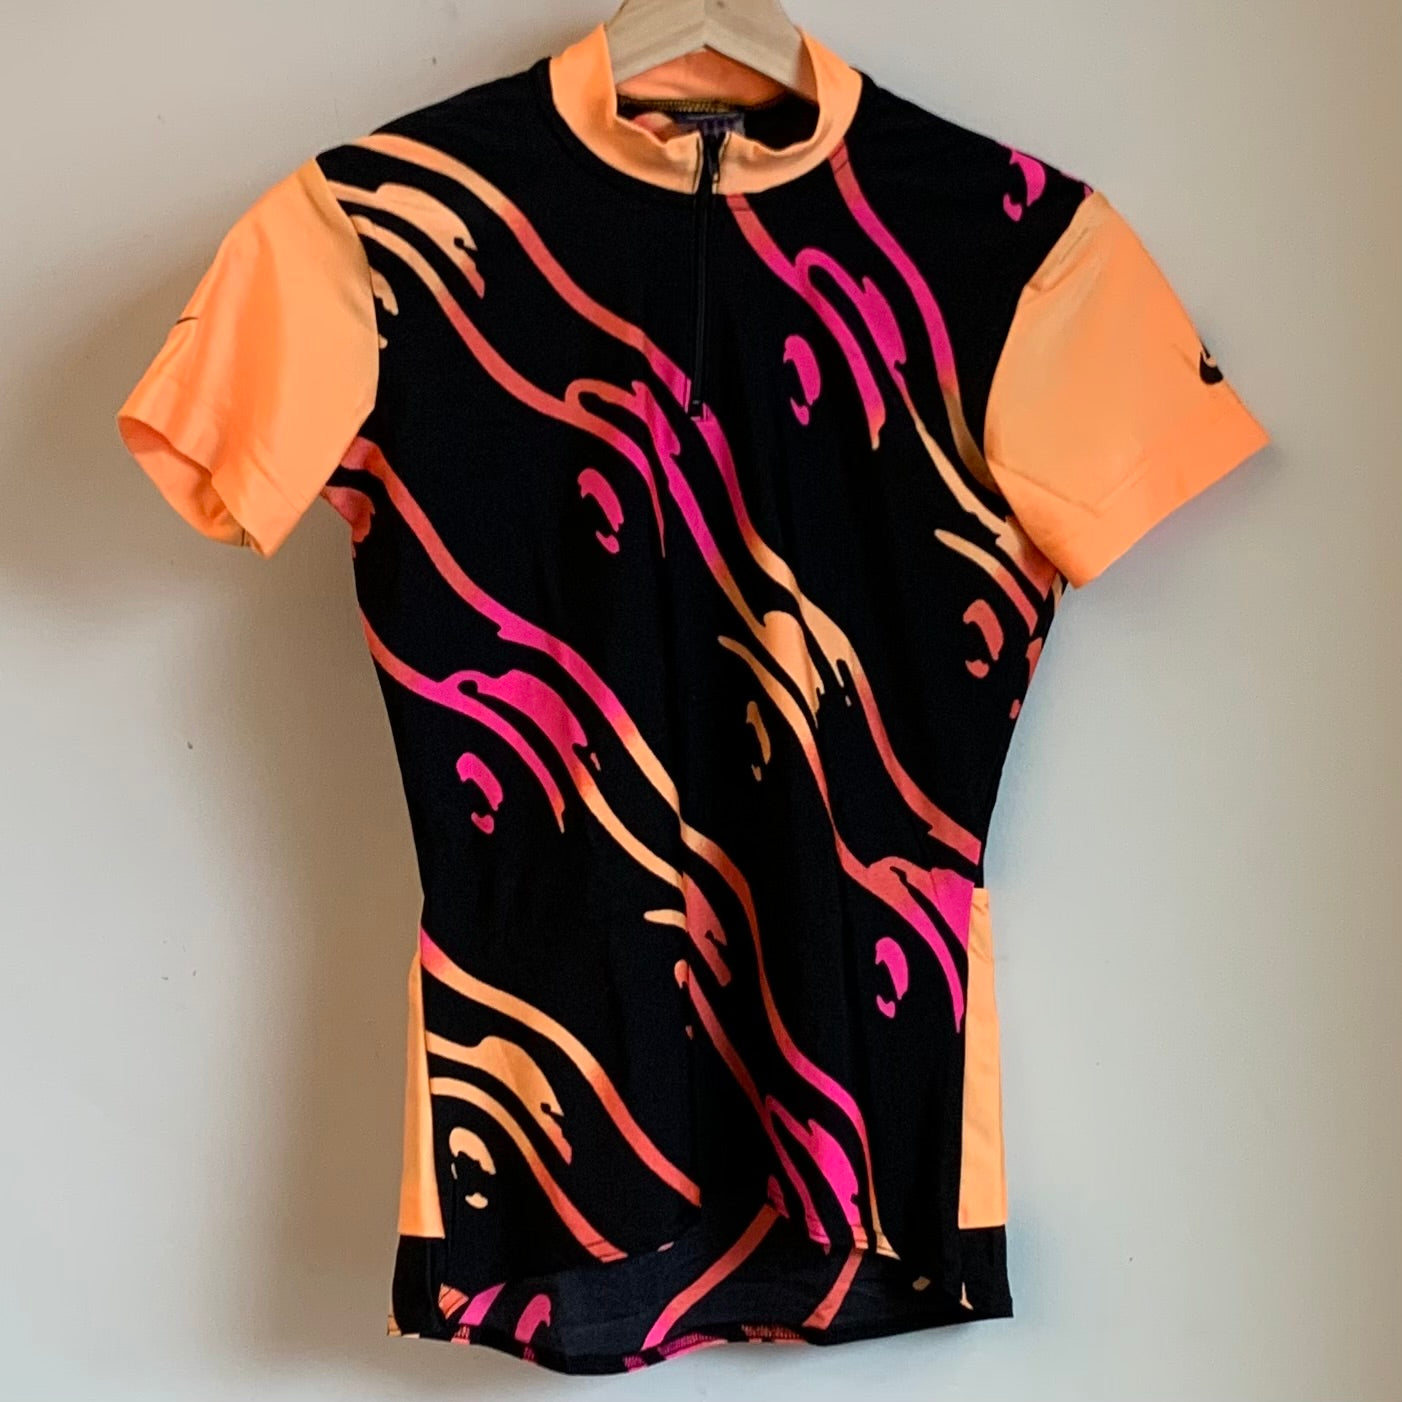 Nike Lava Cycling Shirt